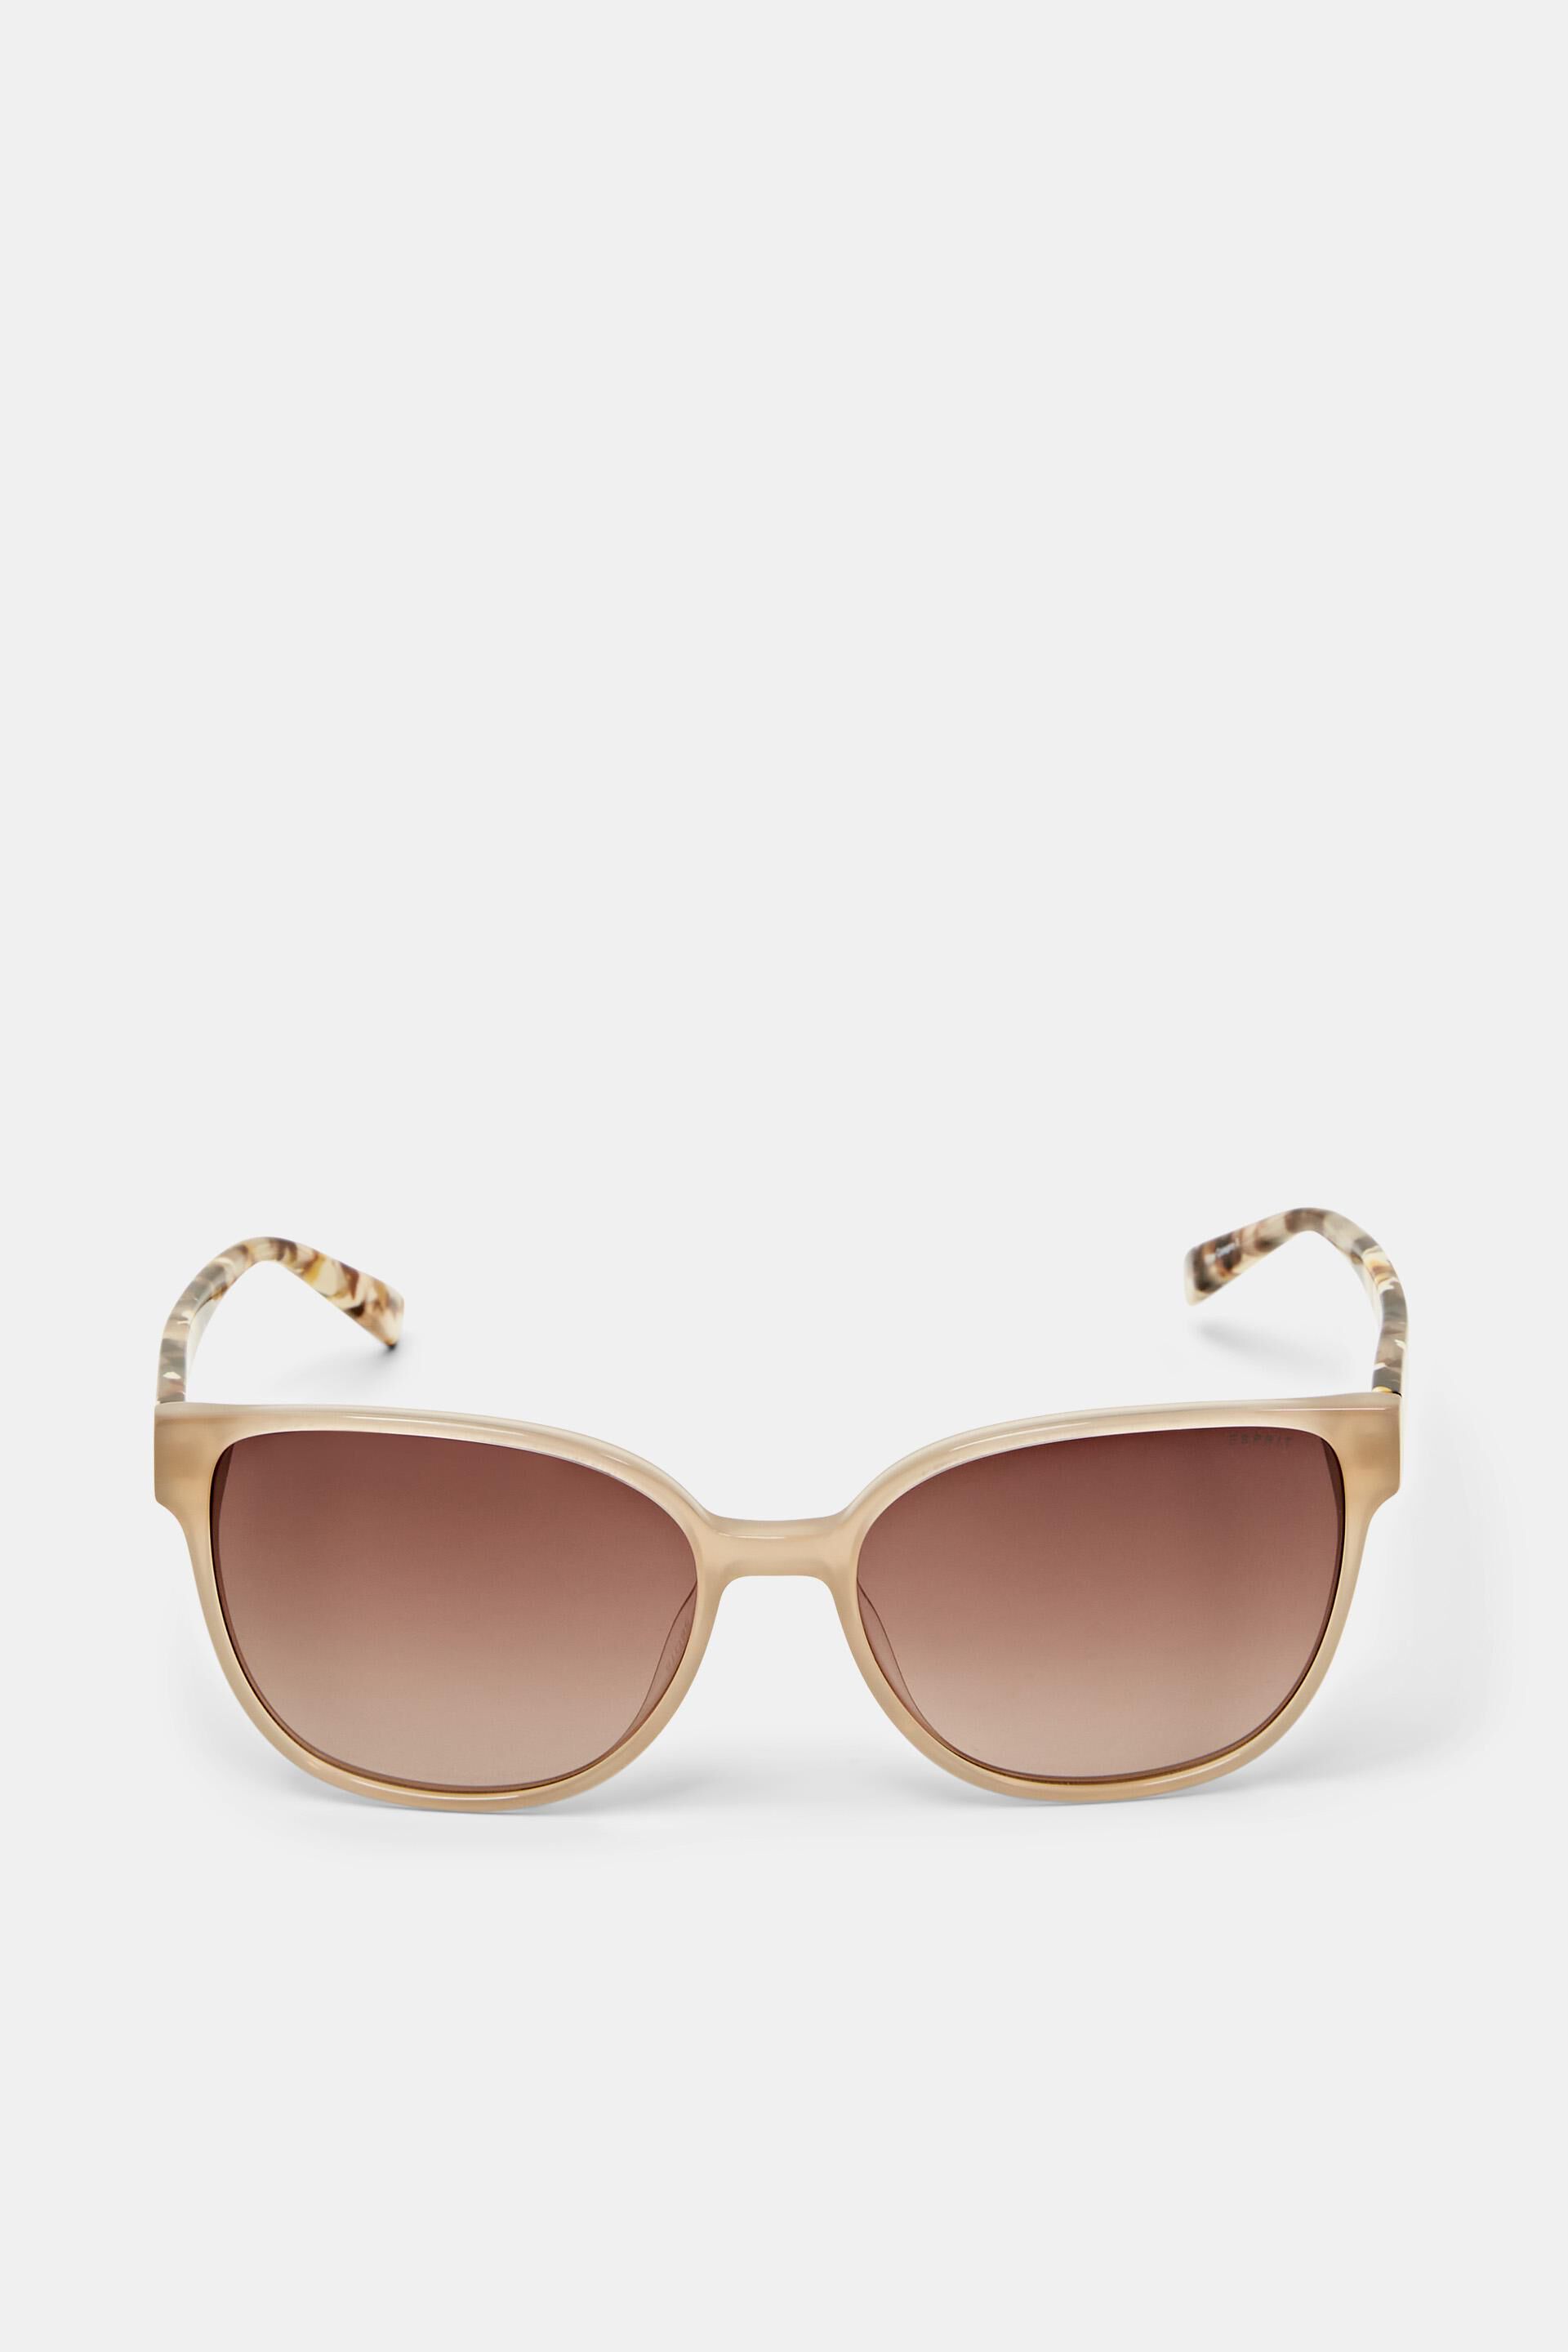 Esprit Online Store Square framed sunglasses